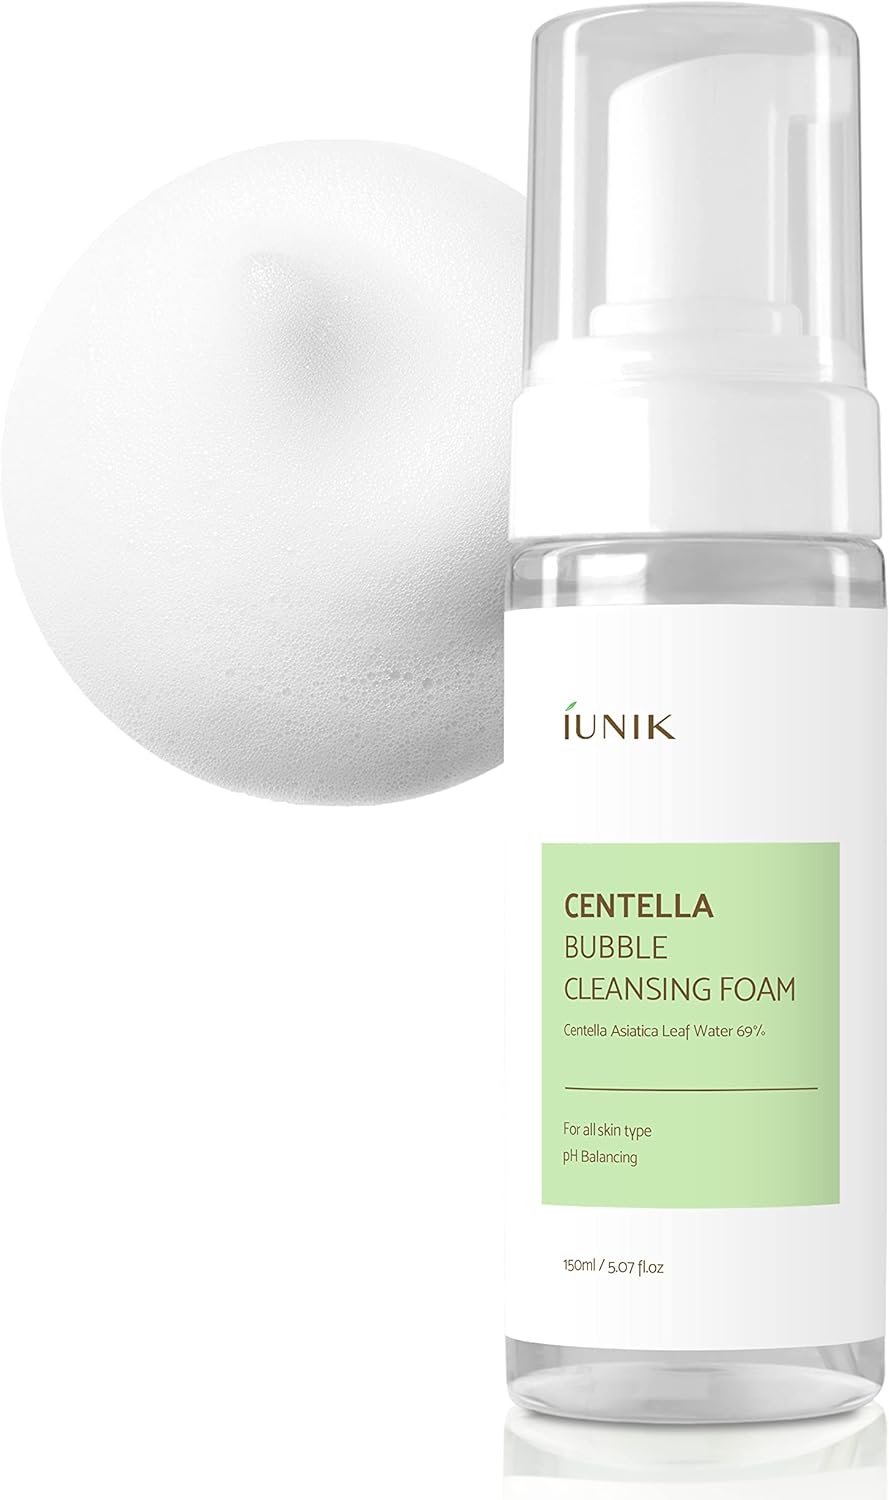 IUNIK Centella Bubble Cleansing Foam